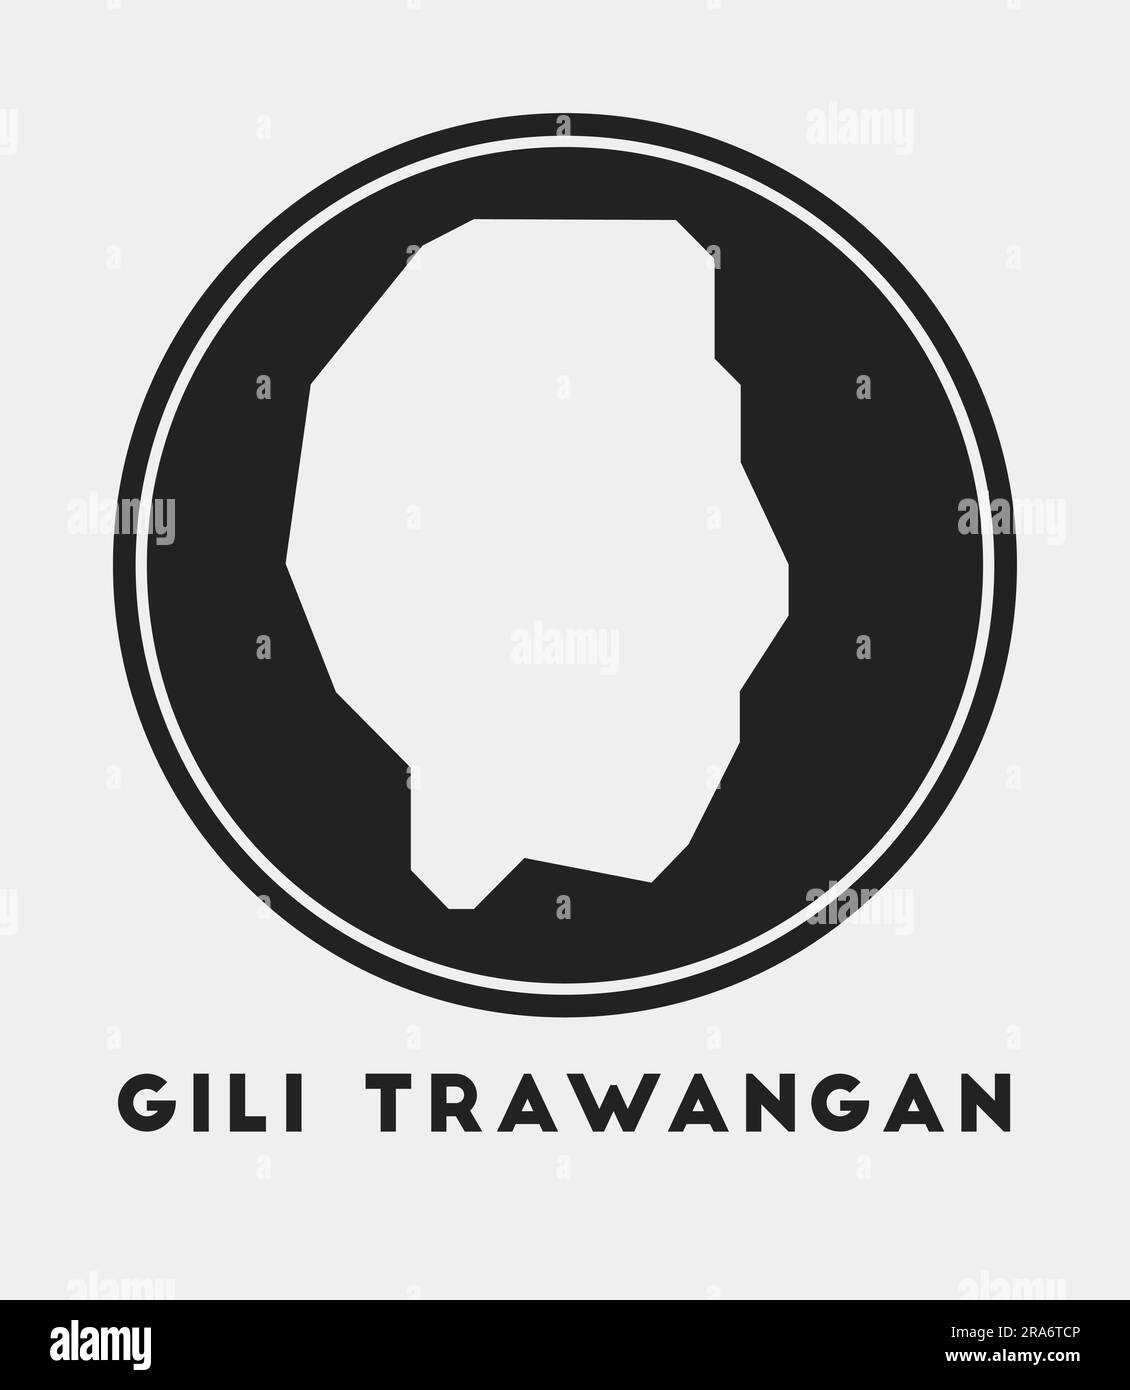 Gili Trawangan icon. Round logo with island map and title. Stylish Gili ...